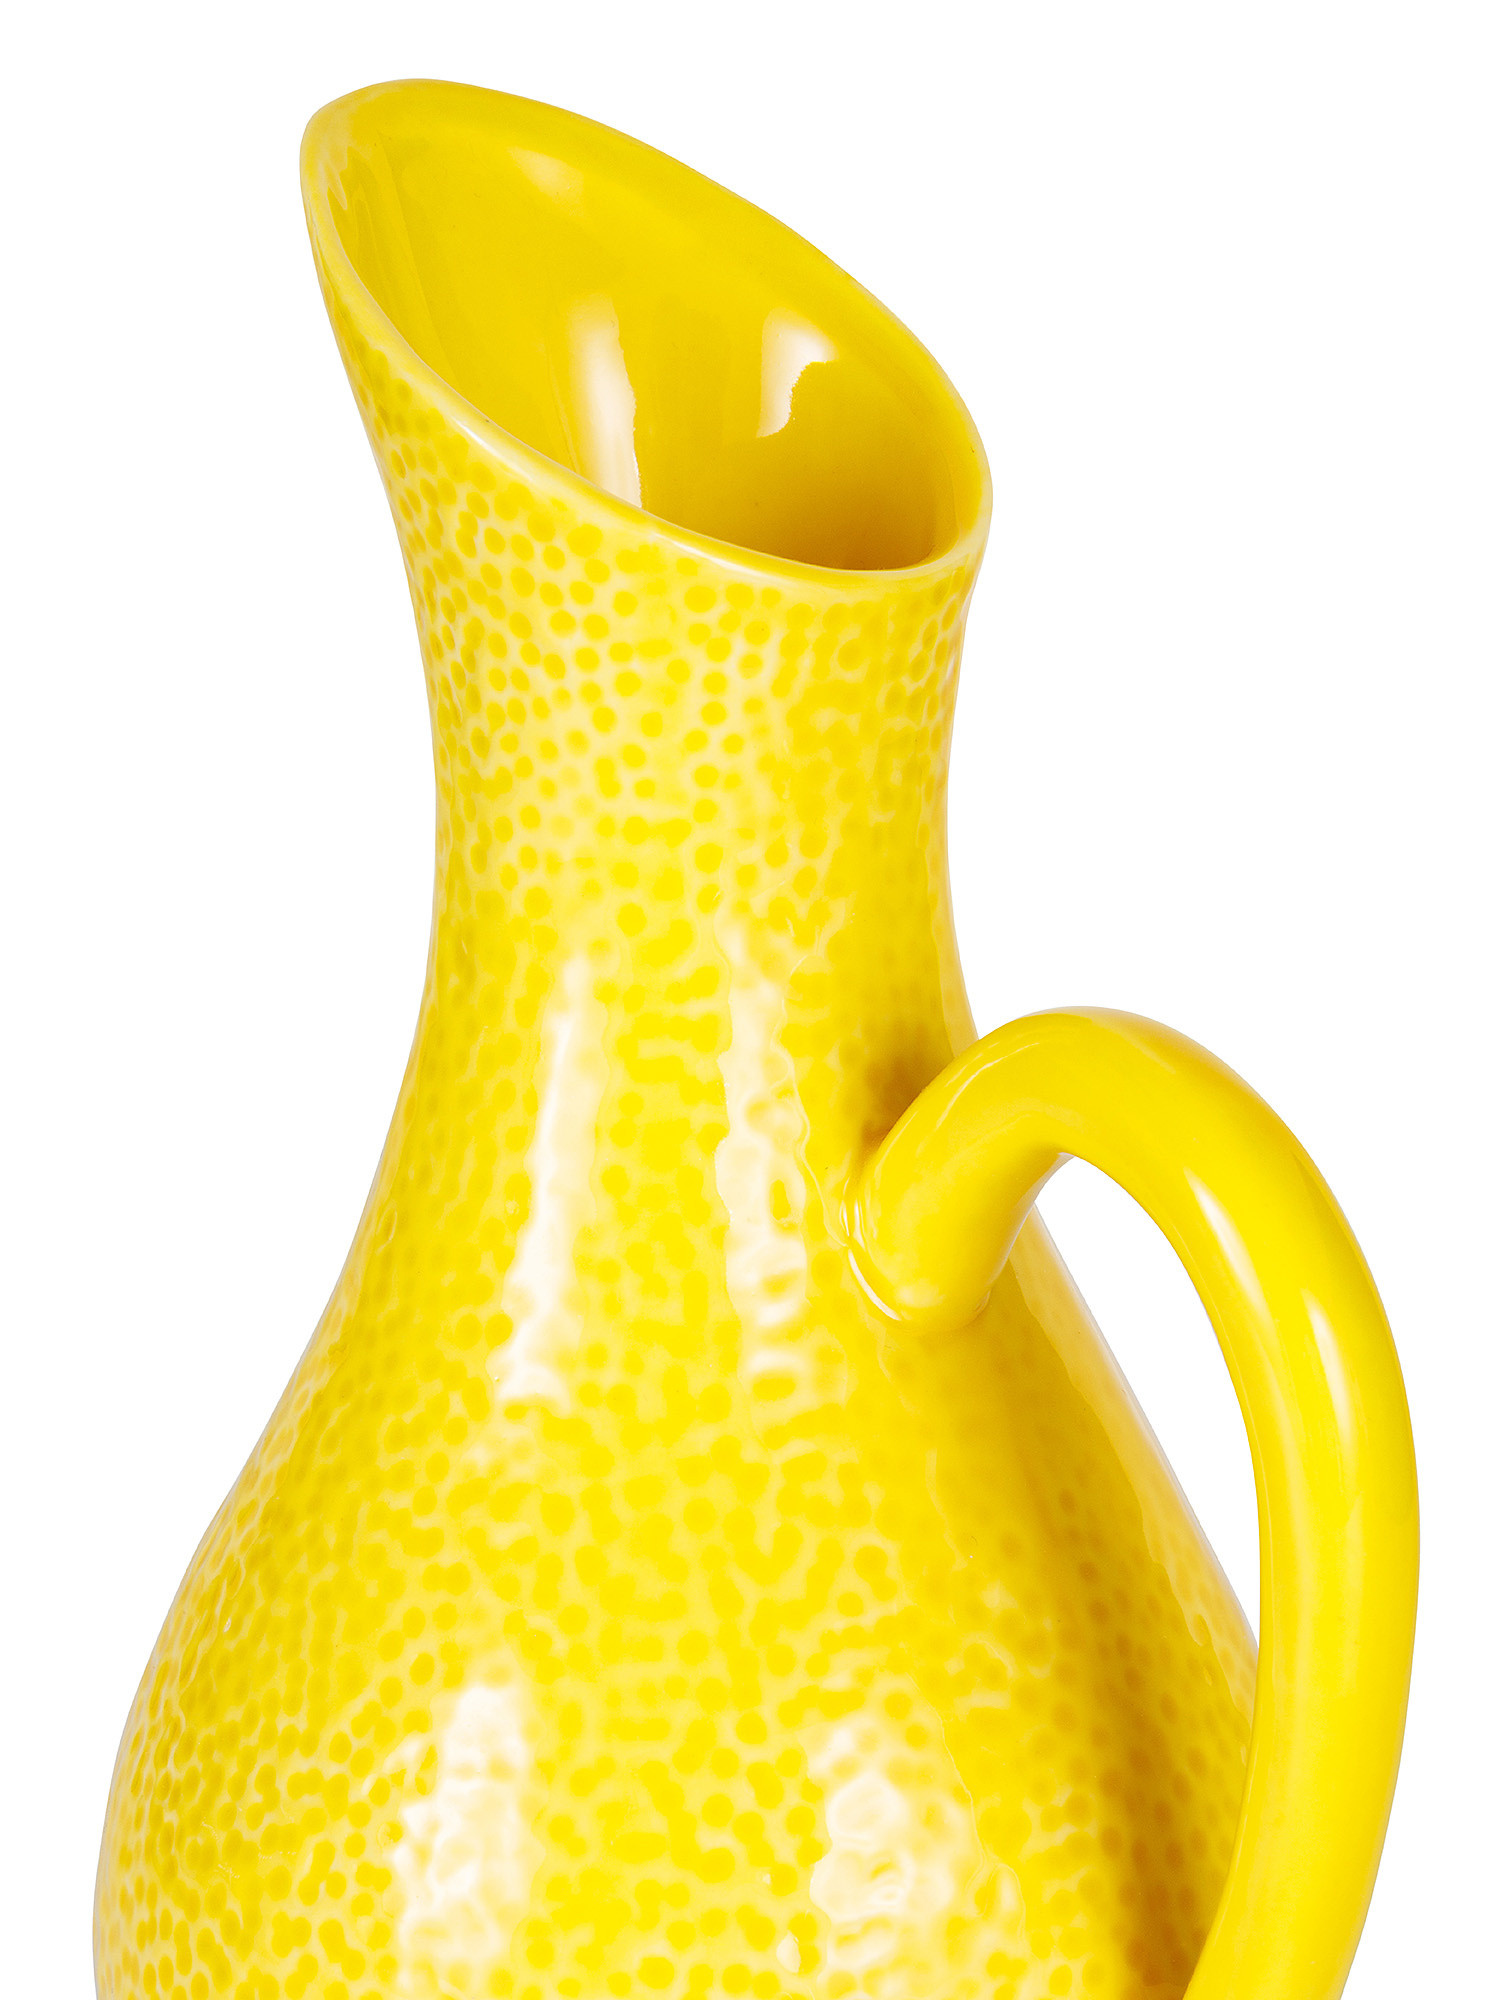 Caraffa porcellana motivo limoni, Bianco, large image number 1